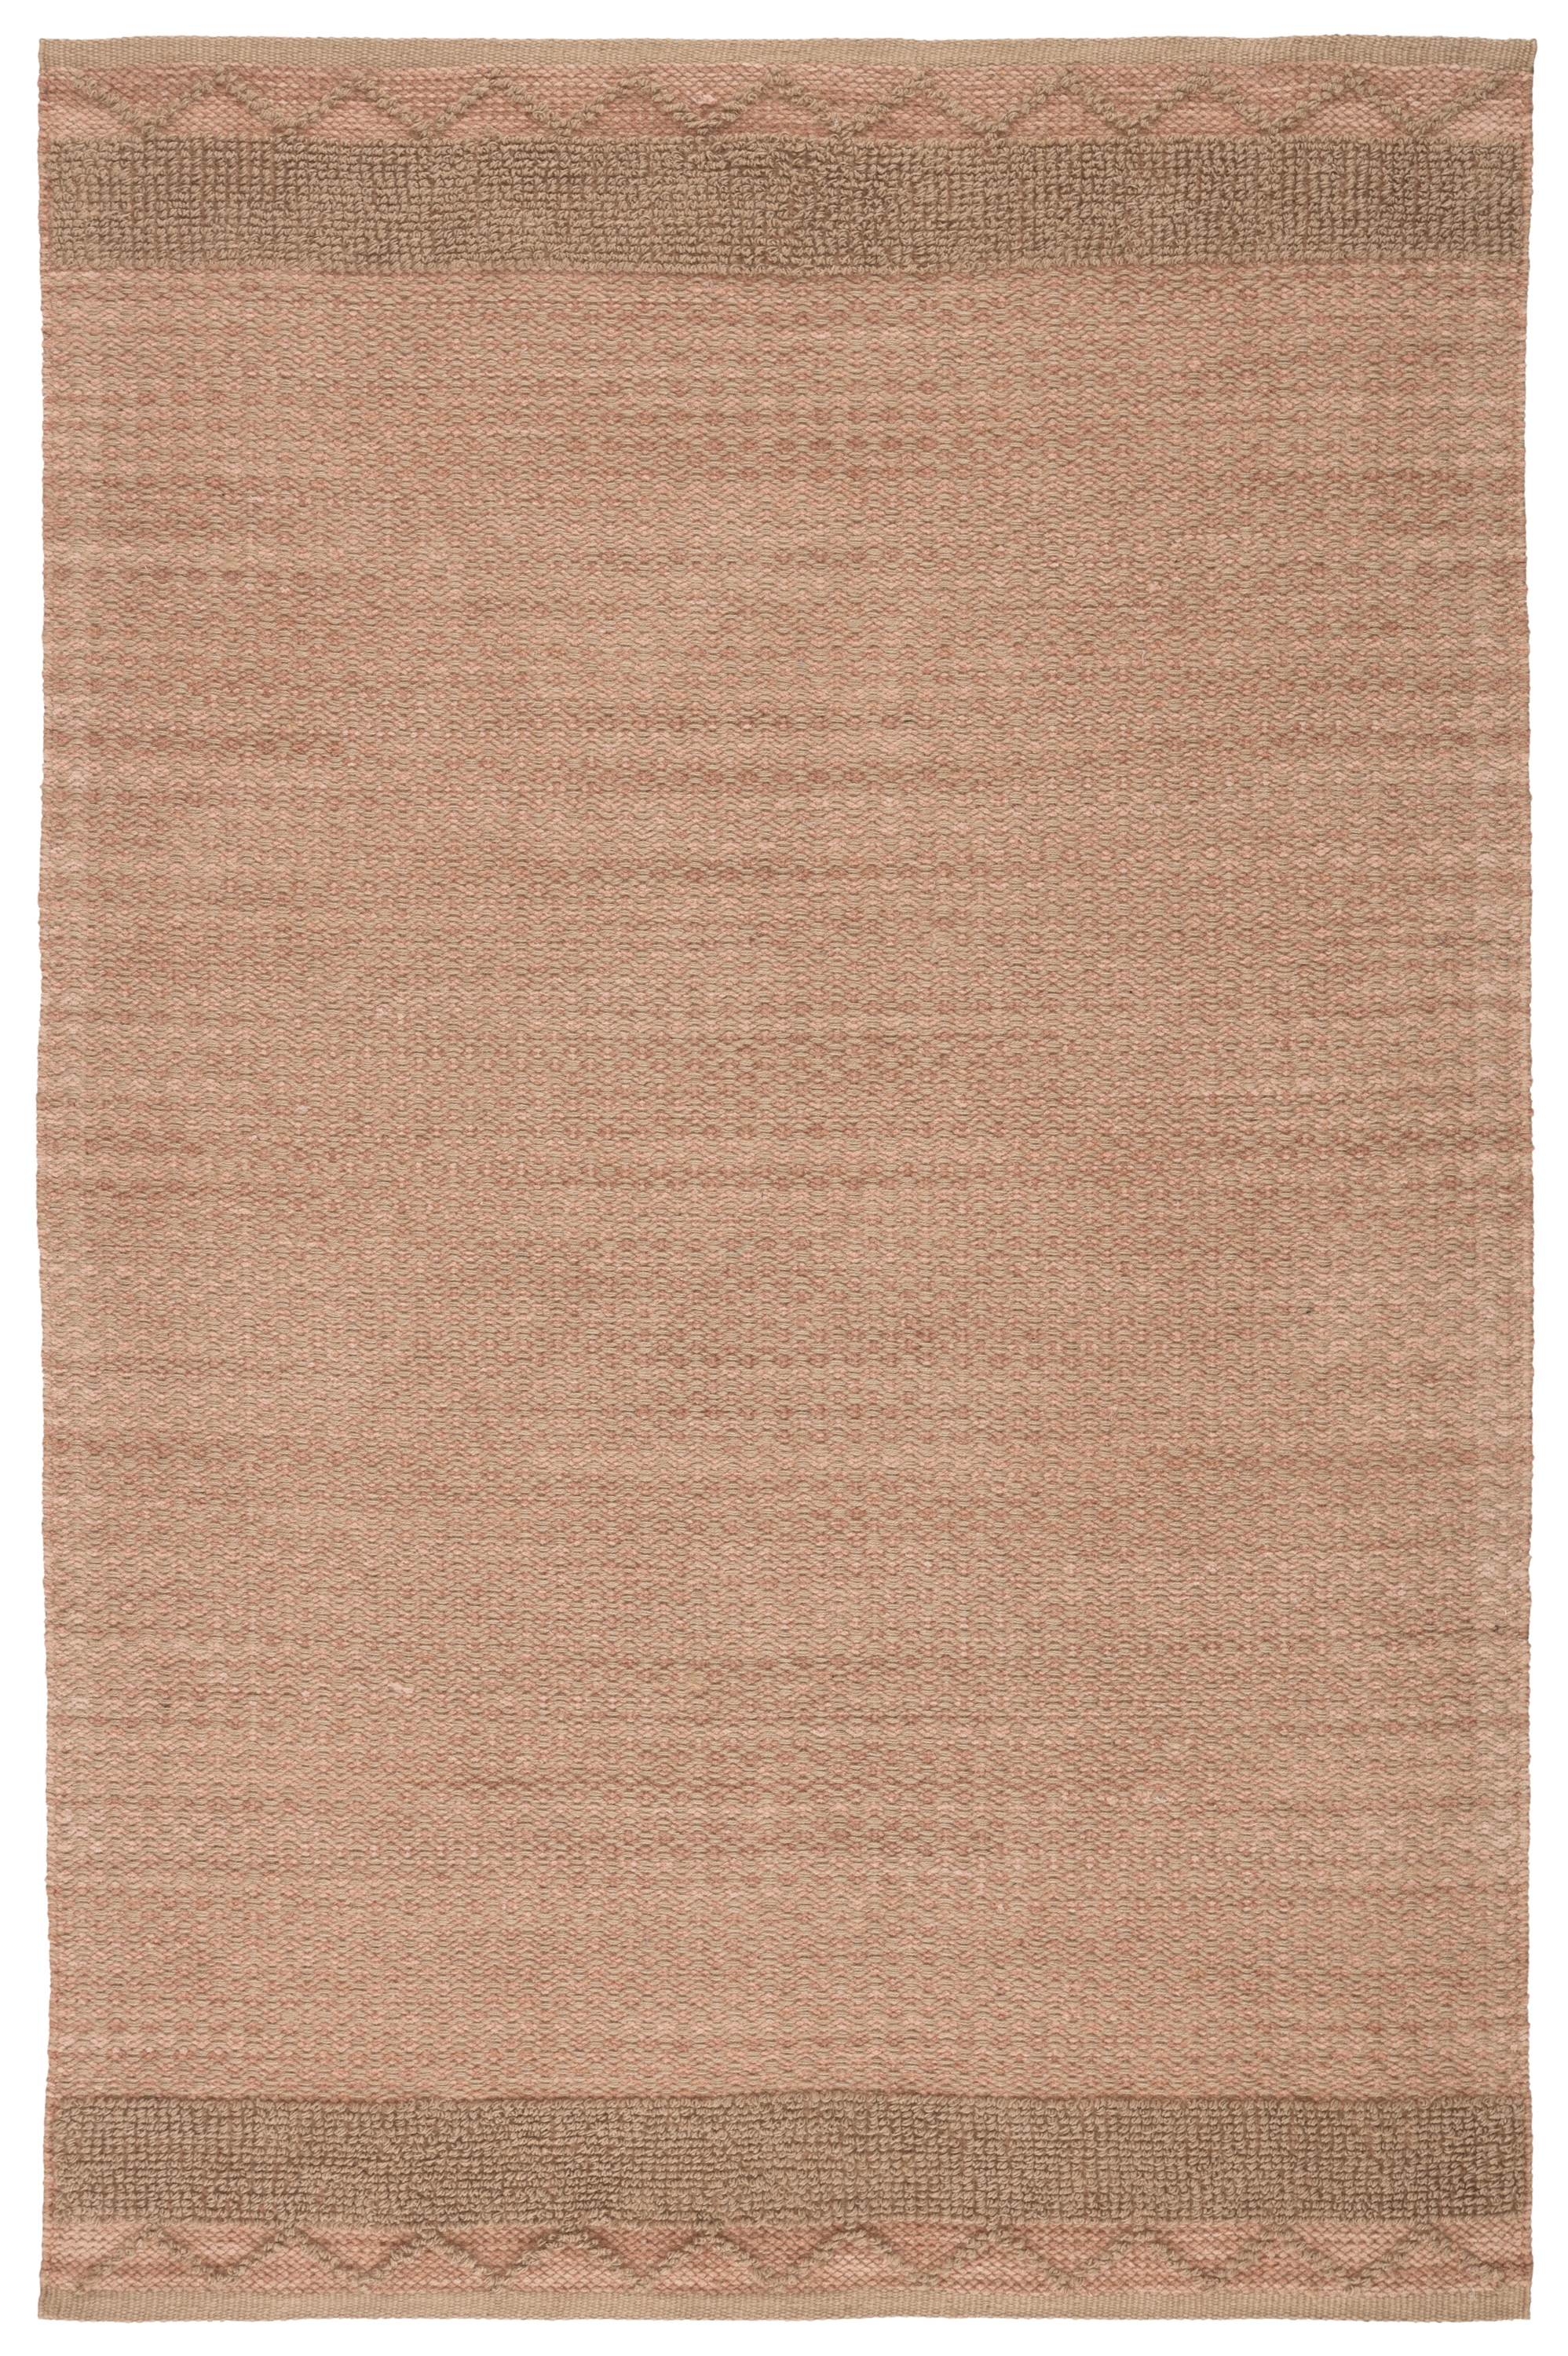 Curran Natural Border Pink/ Tan Area Rug (8'X10') - Image 0